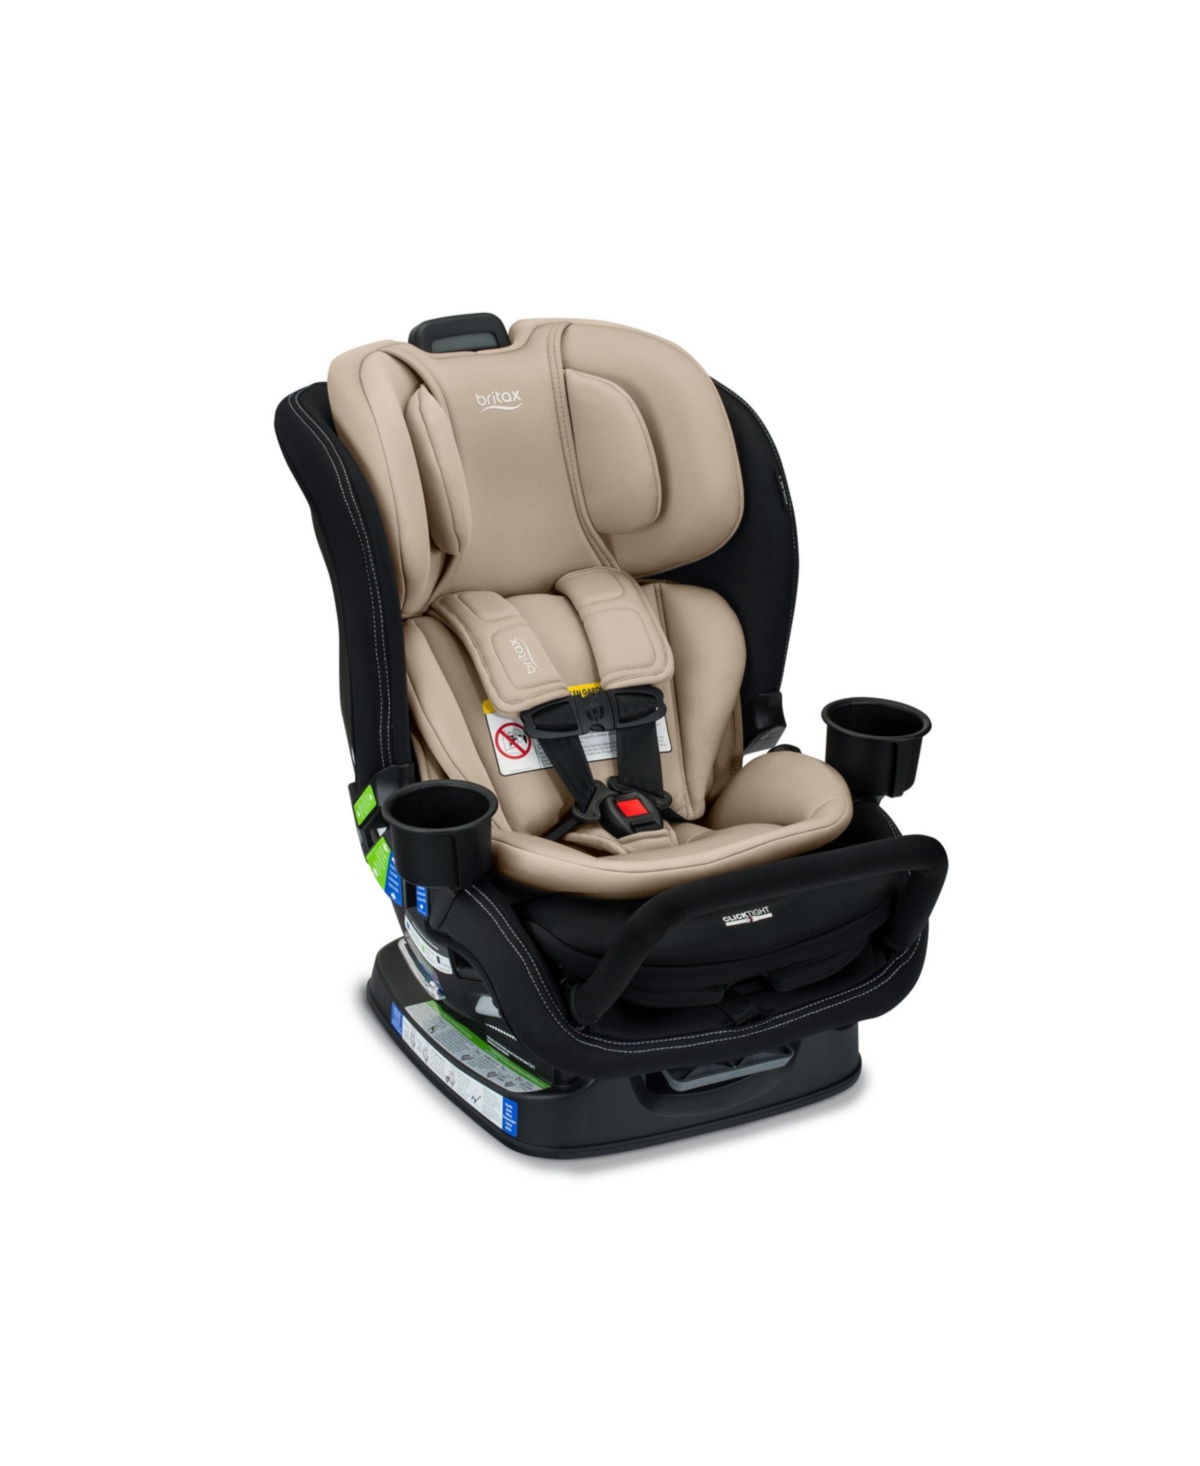 Britax Poplar S Baby Boy Or Baby Girl Convertible Car Seat In Sand Onyx